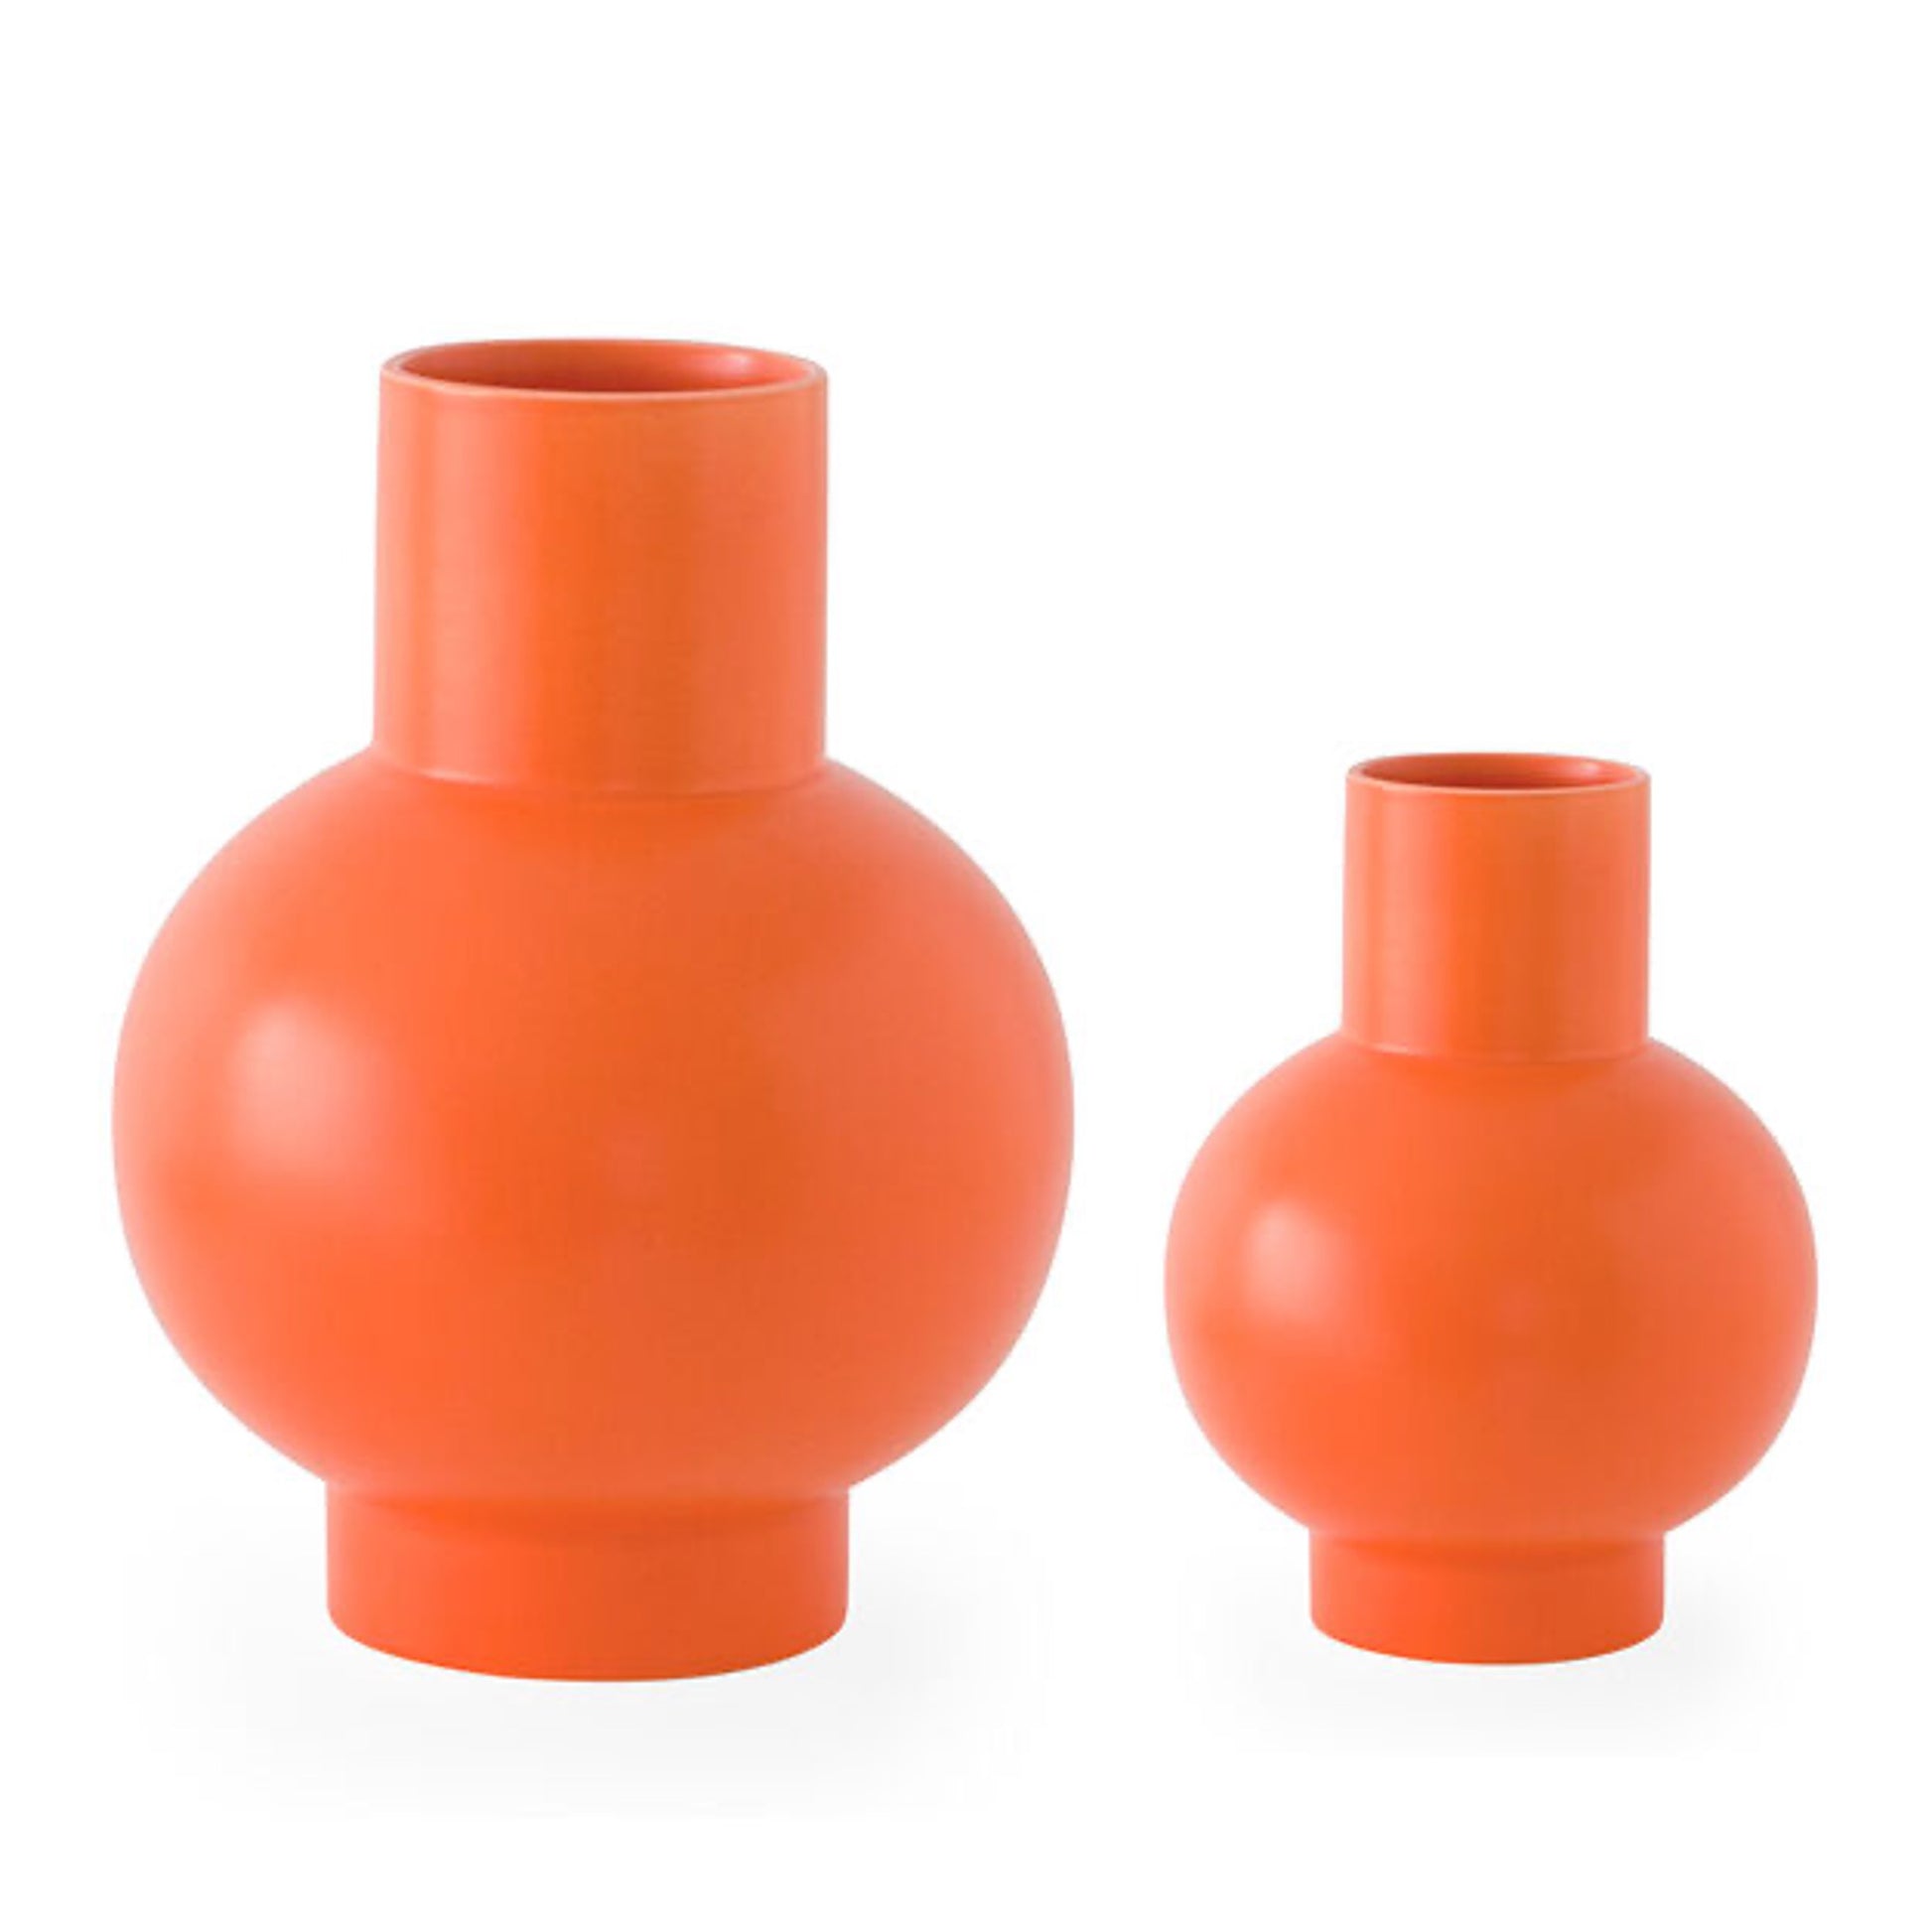 Set of vibrant orange colored modern vases